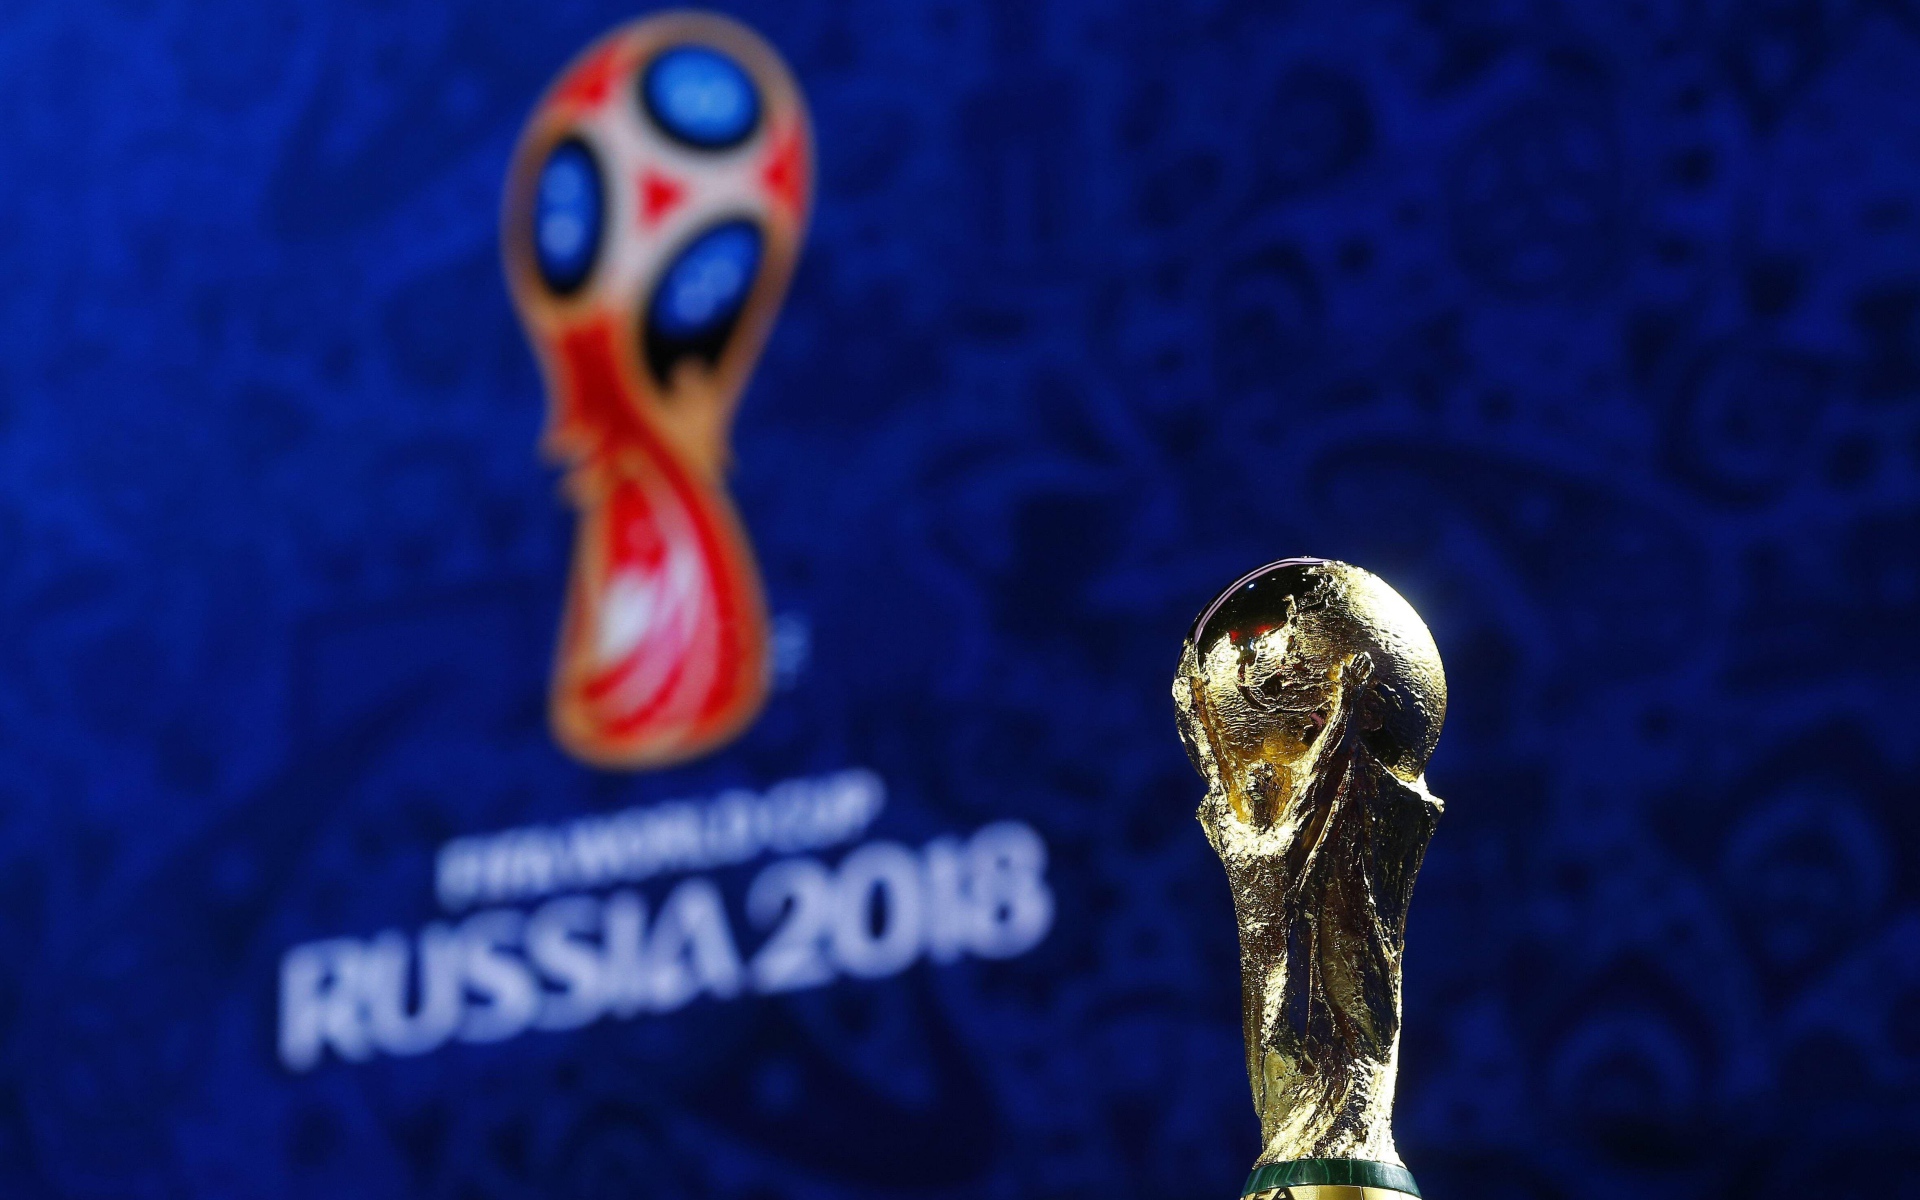 Кубок чемпионата мира по футболу в России 2018 на синем фоне